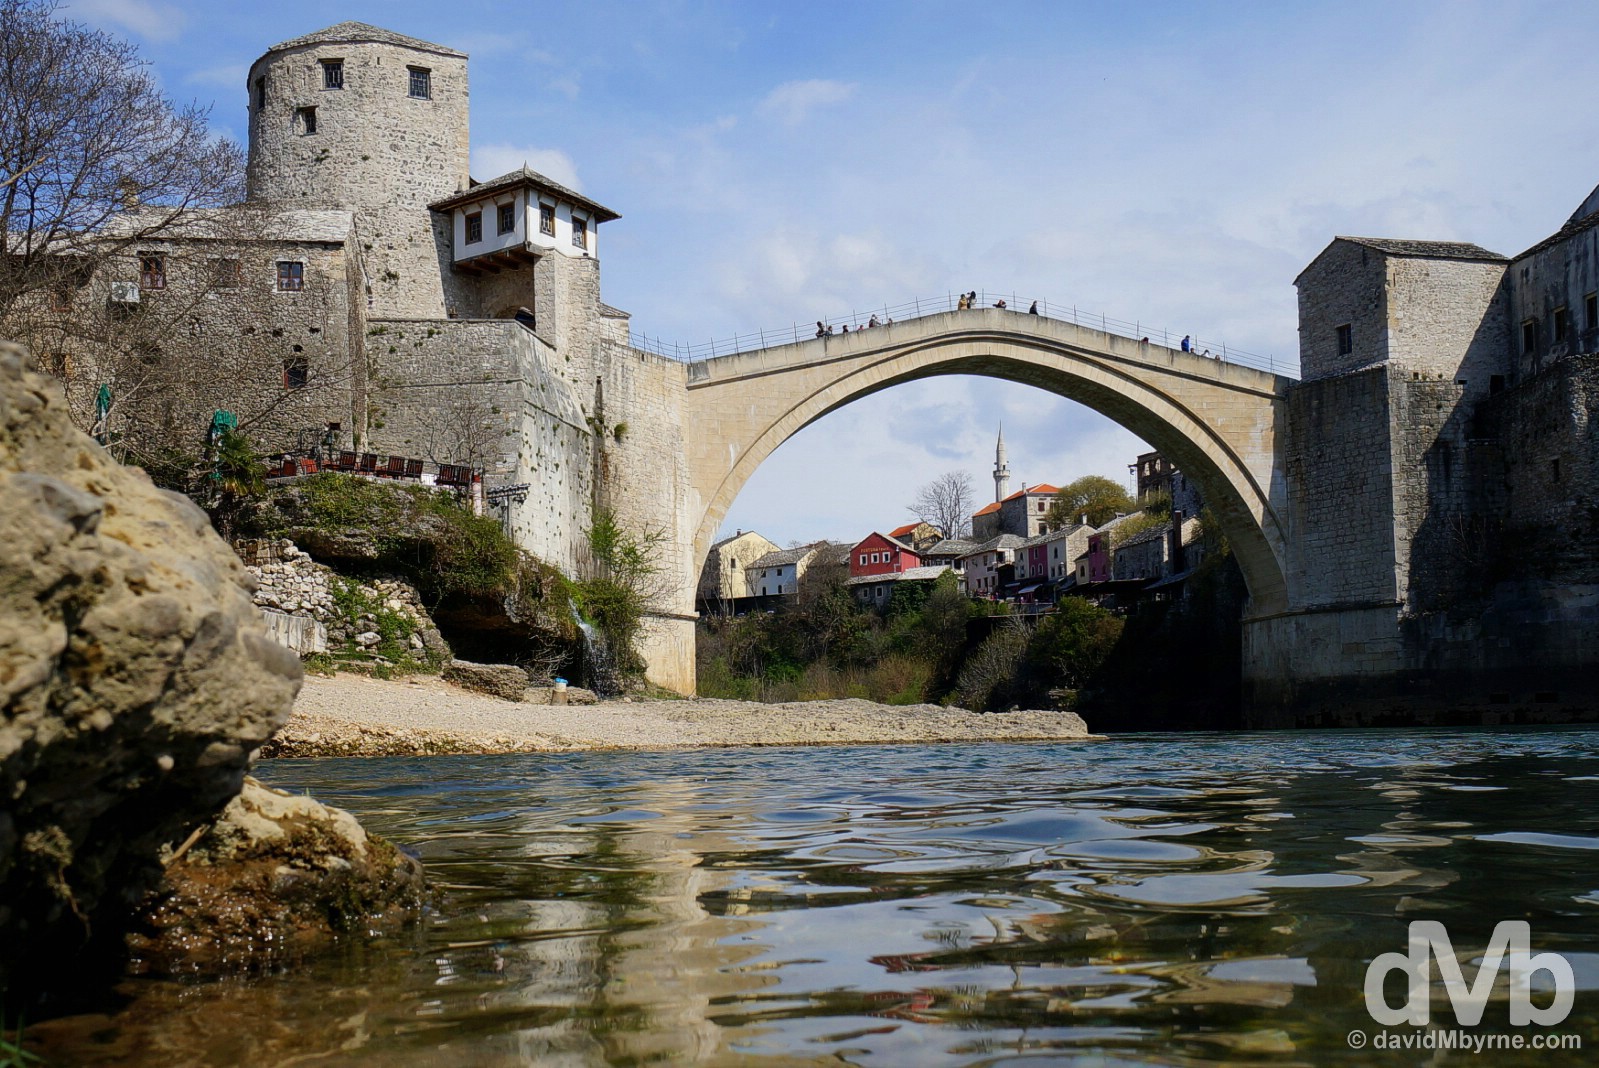 The iconic Stari Most (Old Bridge) over the Neretva River in Mostar, Bosnia & Herzegovina. April 6, 2015.